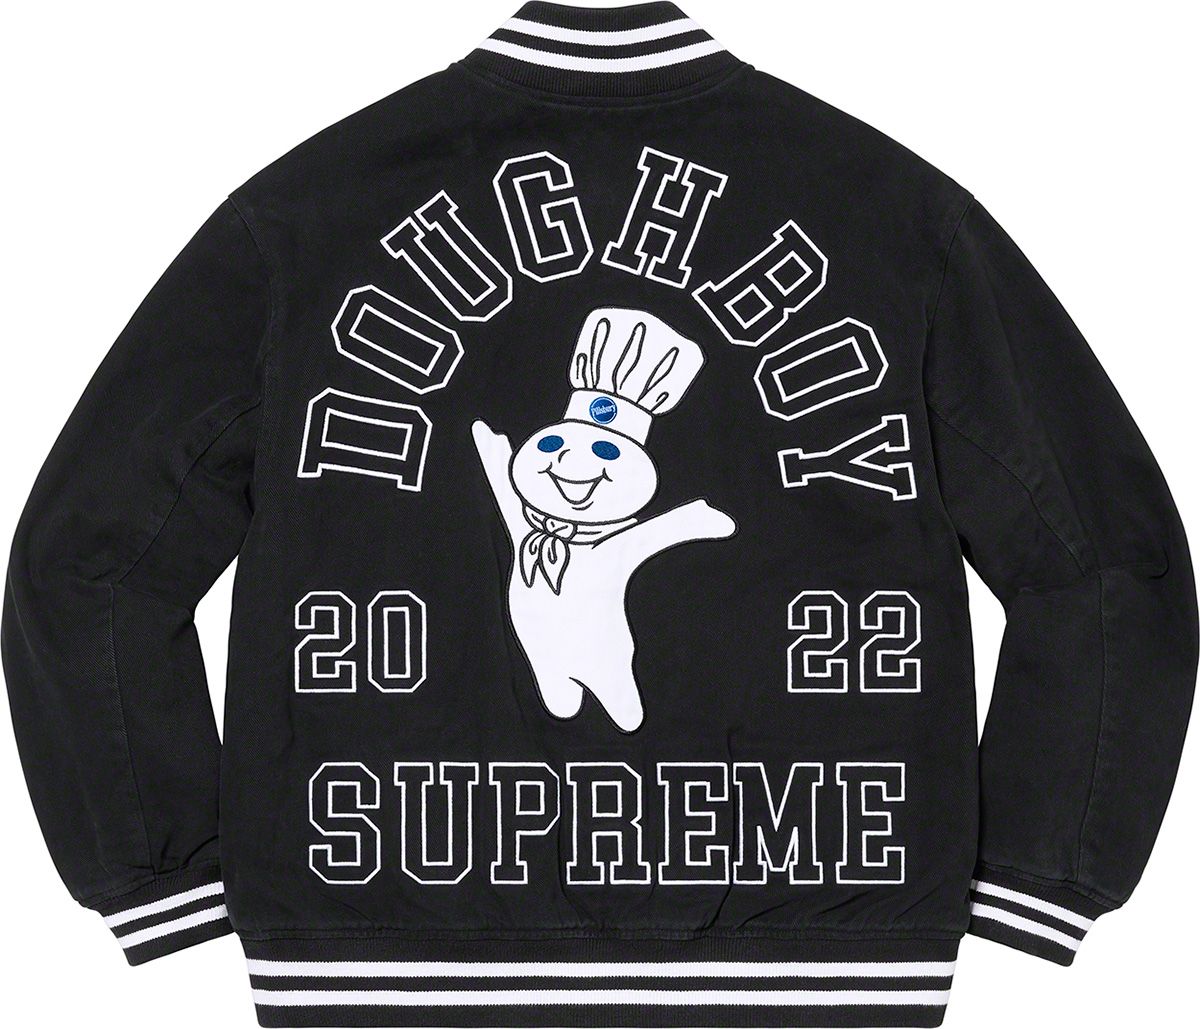 Supreme®/Mitchell & Ness® Doughboy Twill Varsity Jacket - Fall 